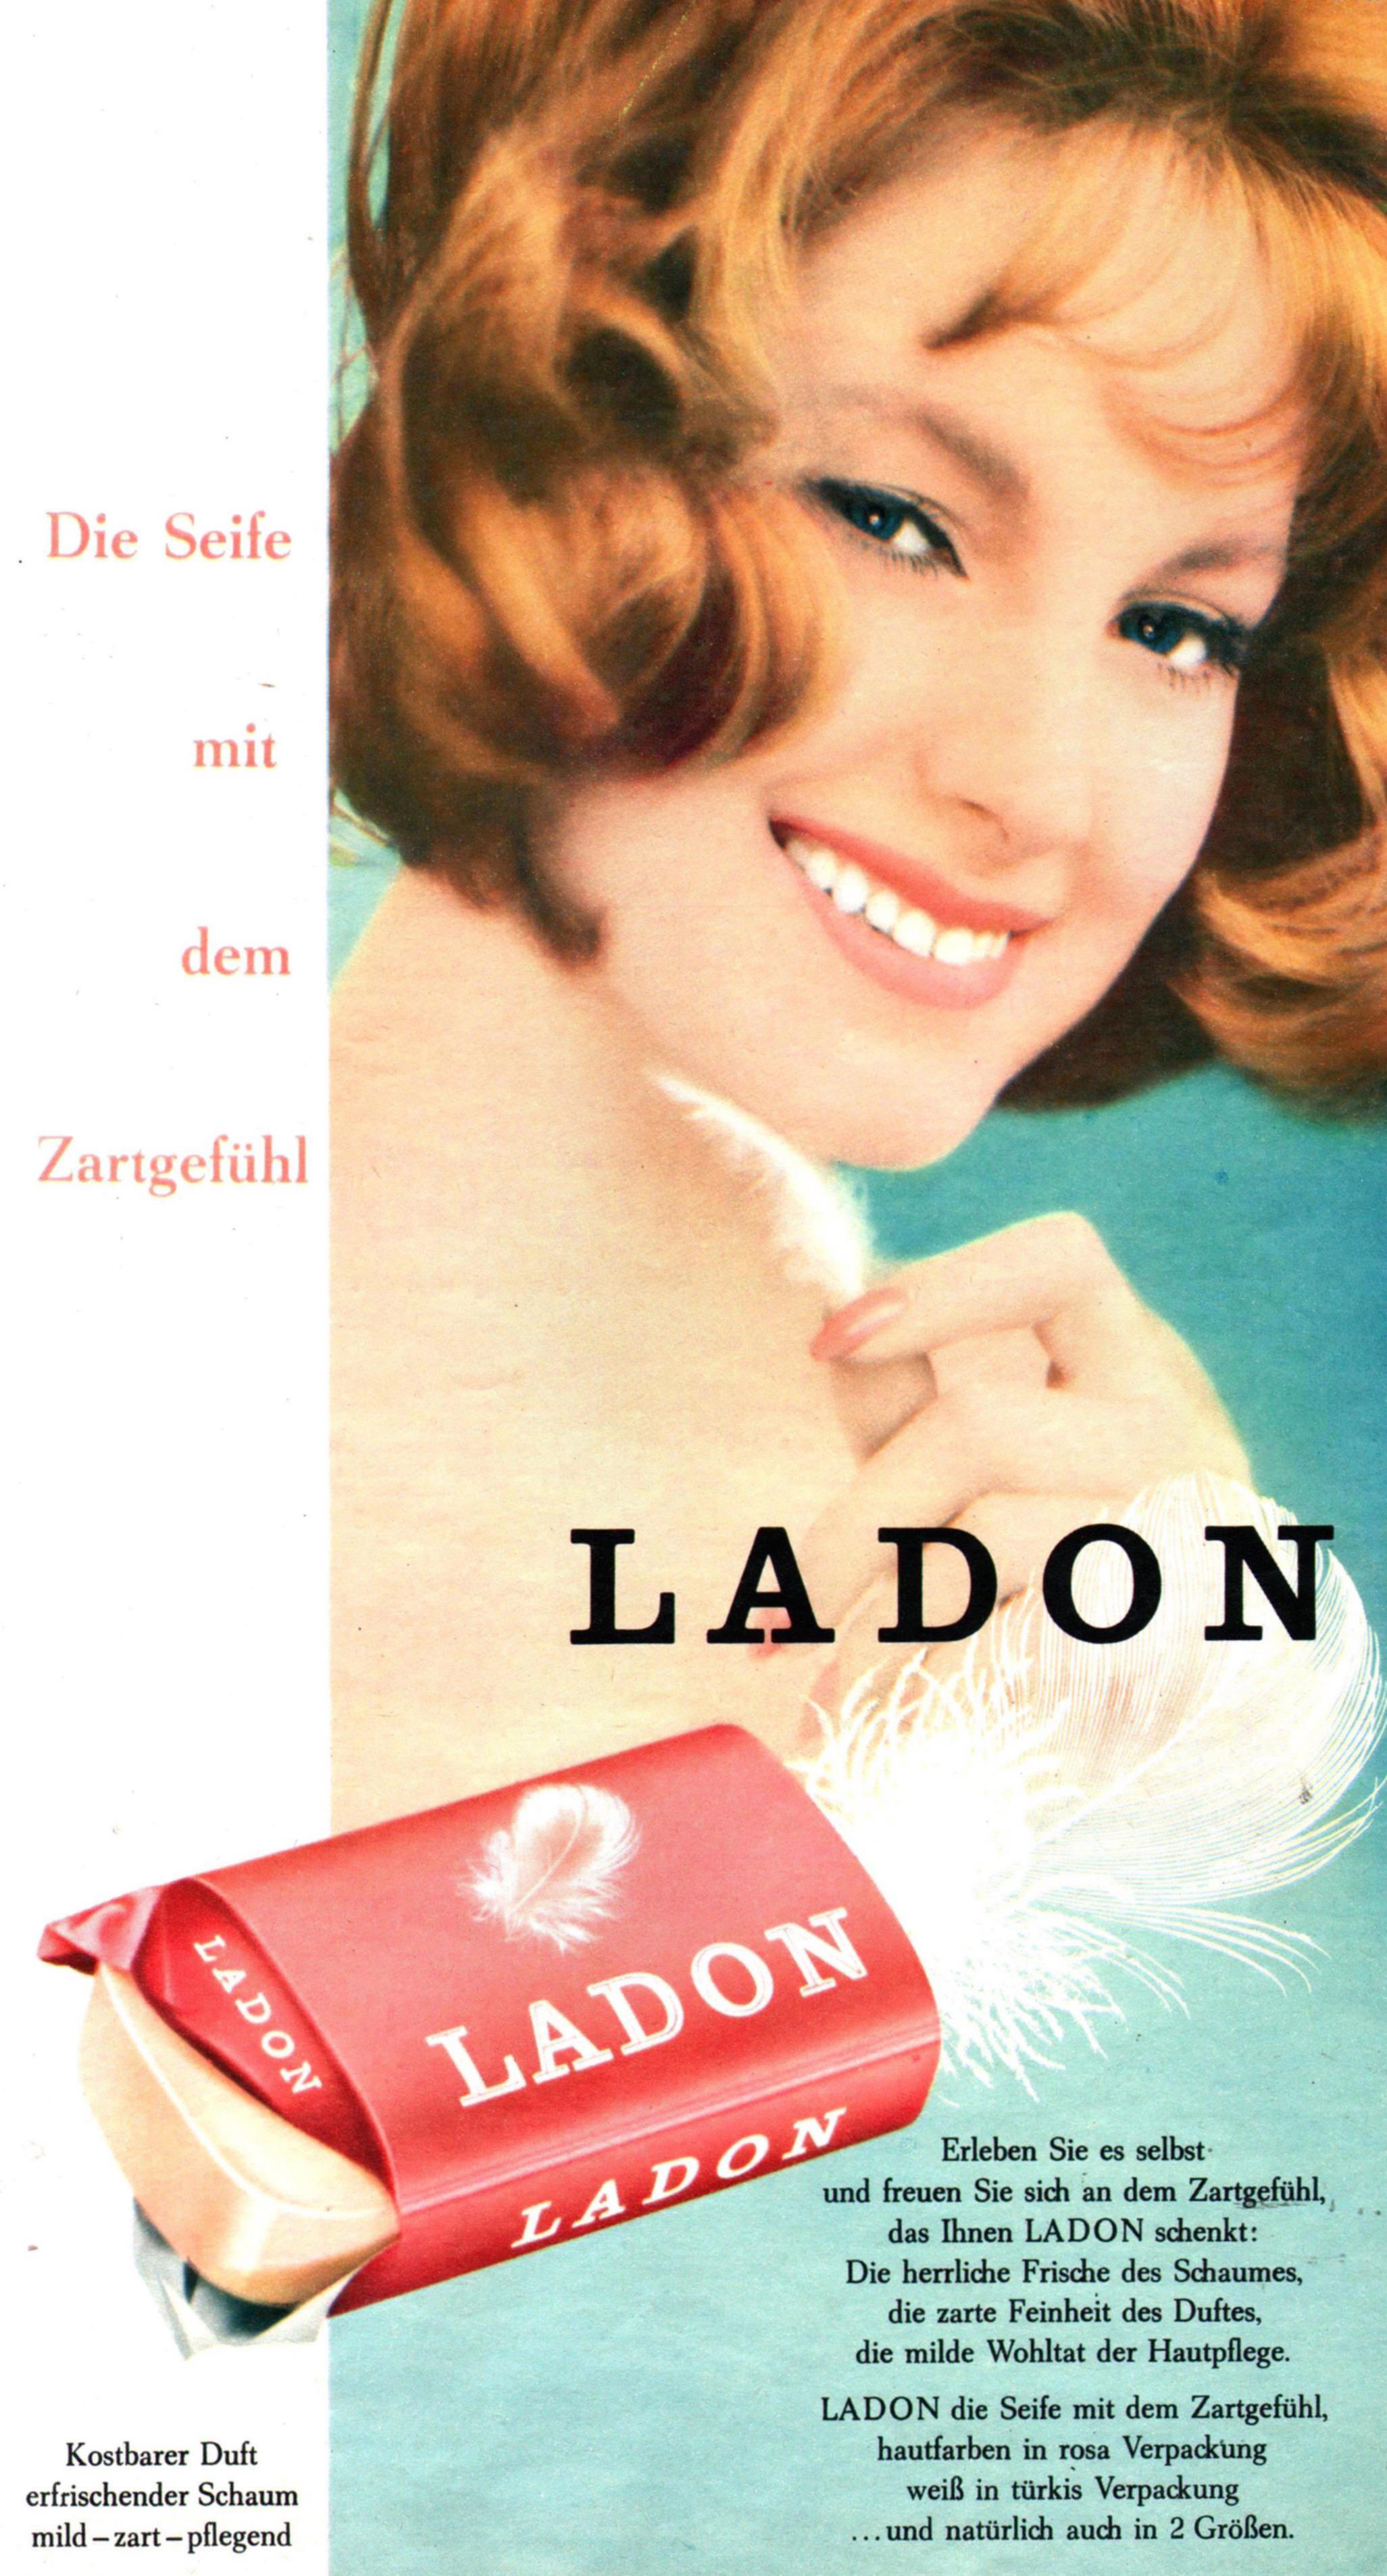 Landon 1961 99.jpg